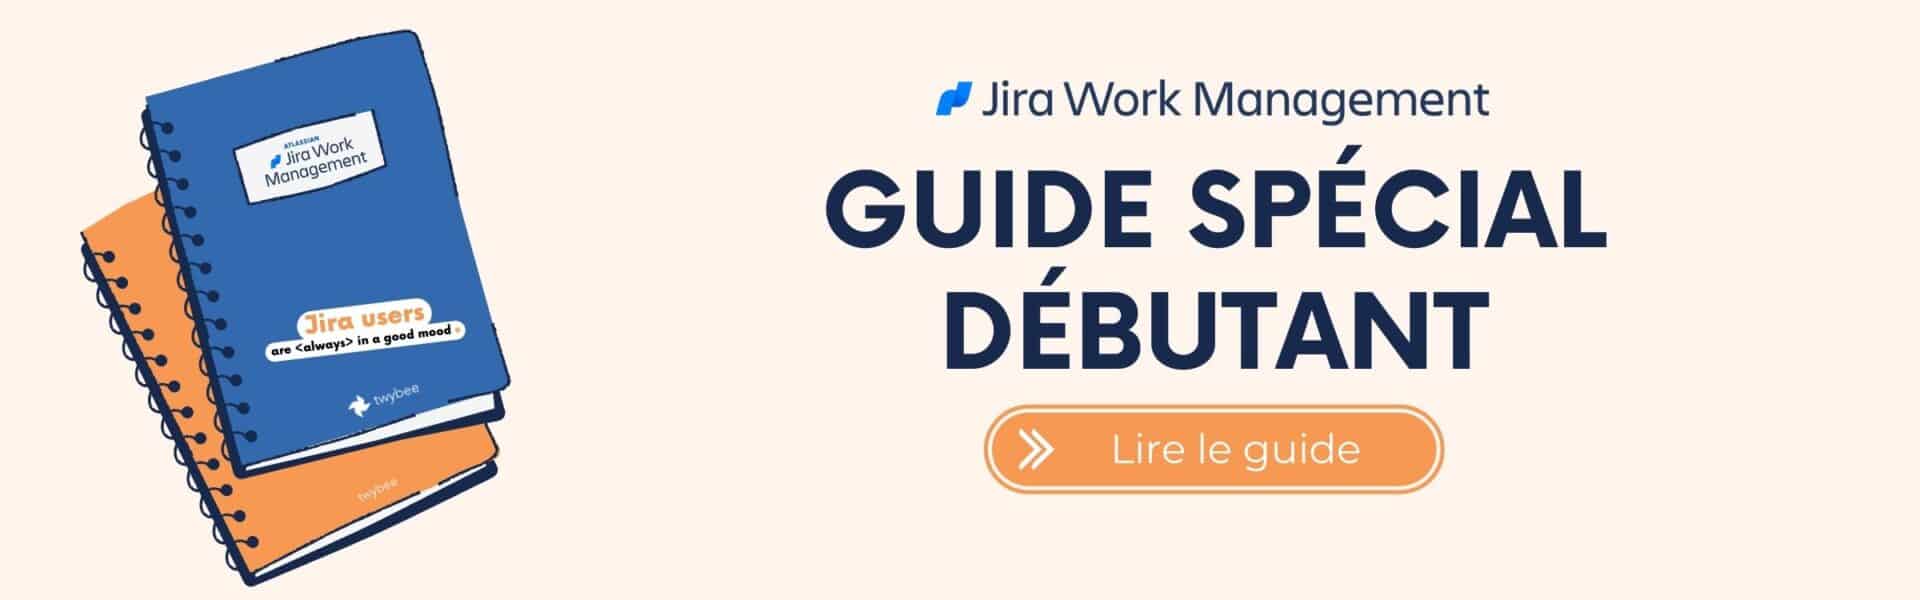 Guide Jira Work Management